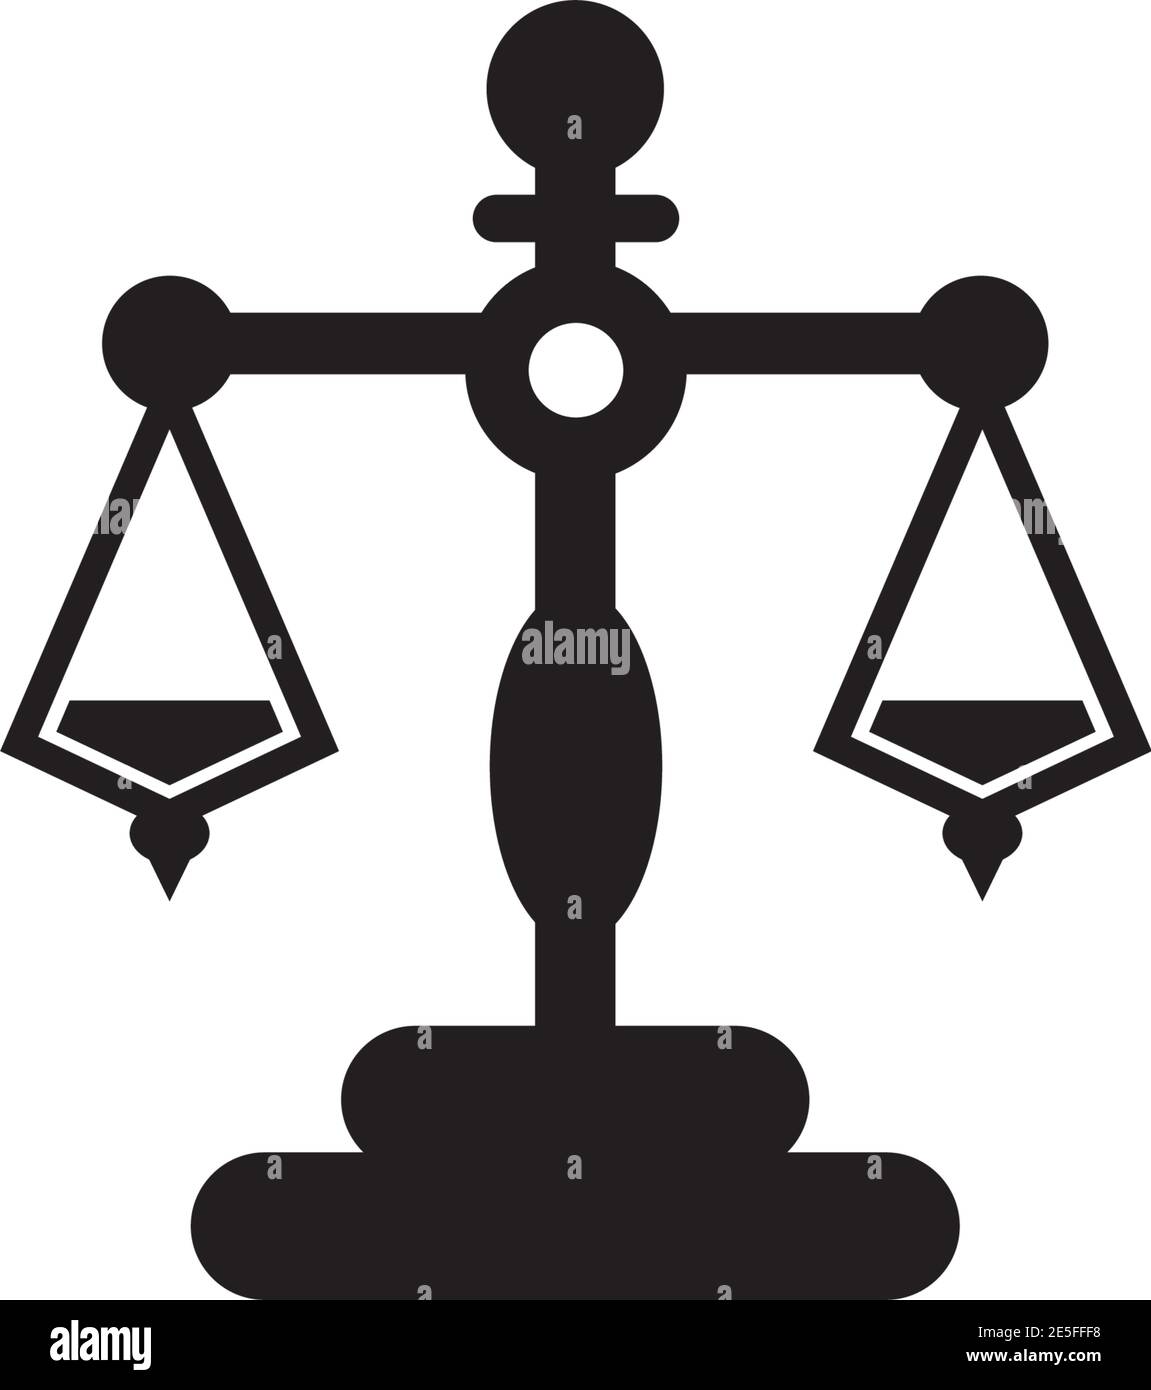 justice cross logo